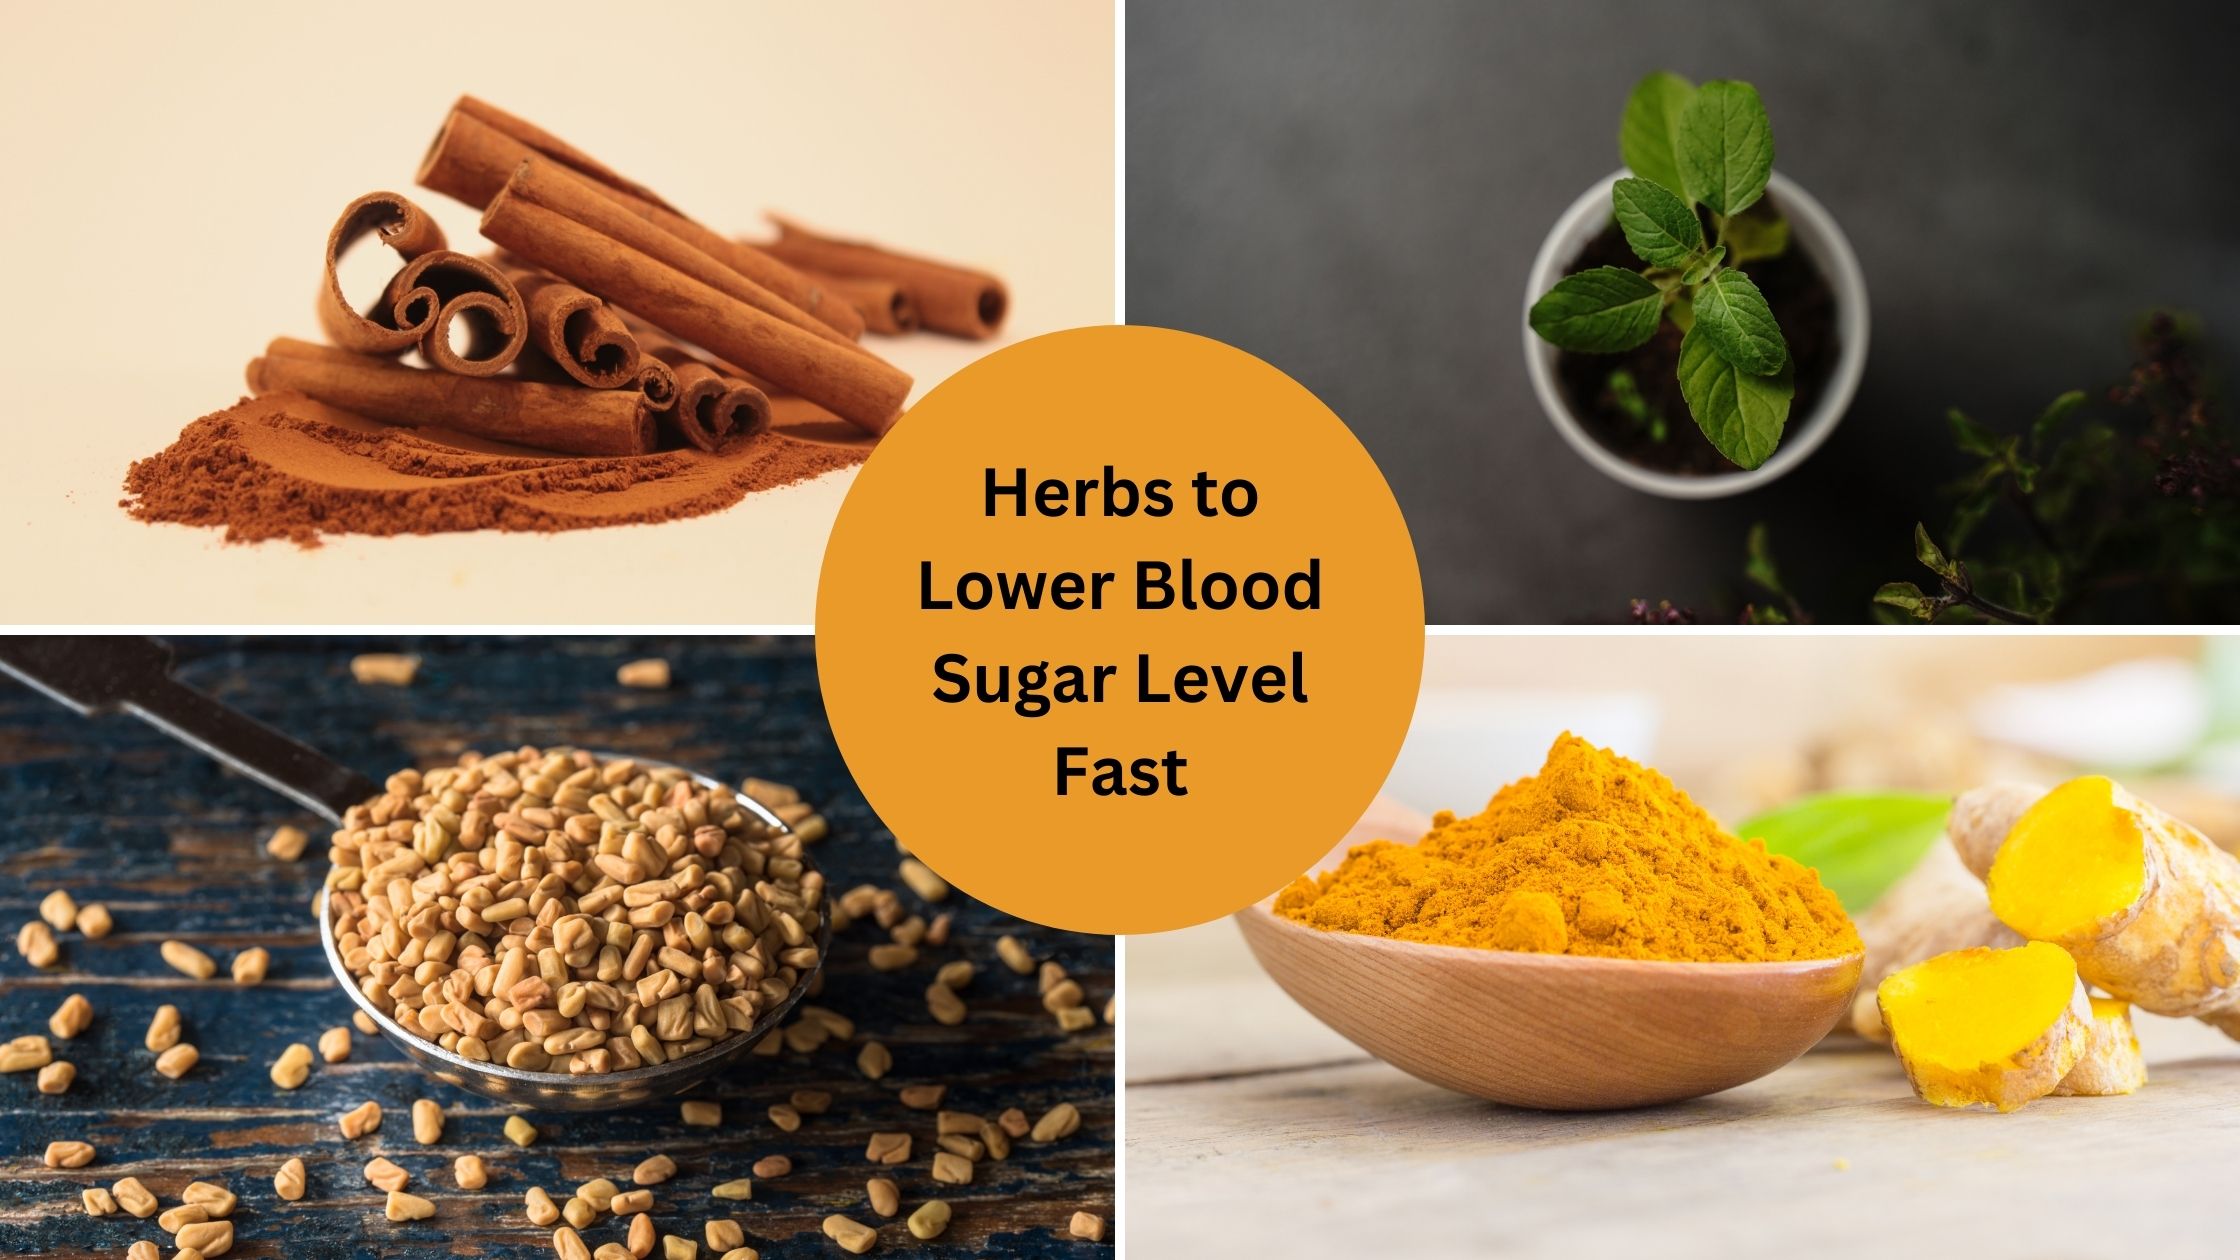 Herbs that Lower Blood Sugar Fast